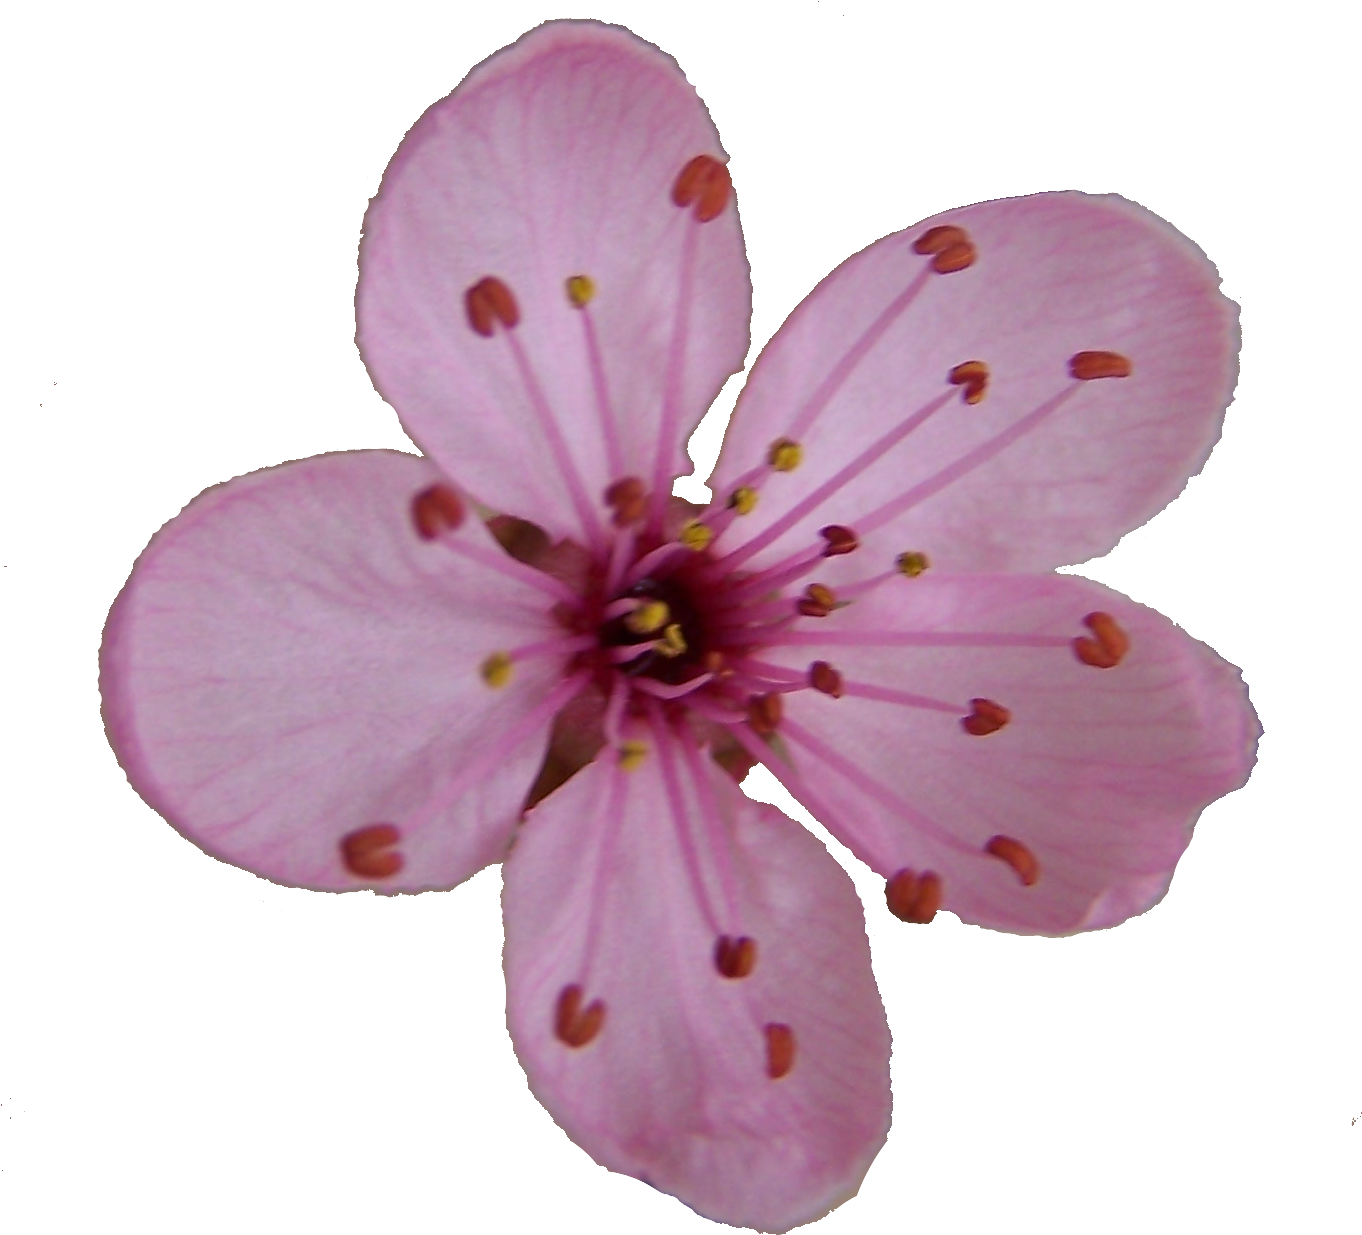 Blossom Single Flower Free Download Image PNG Image